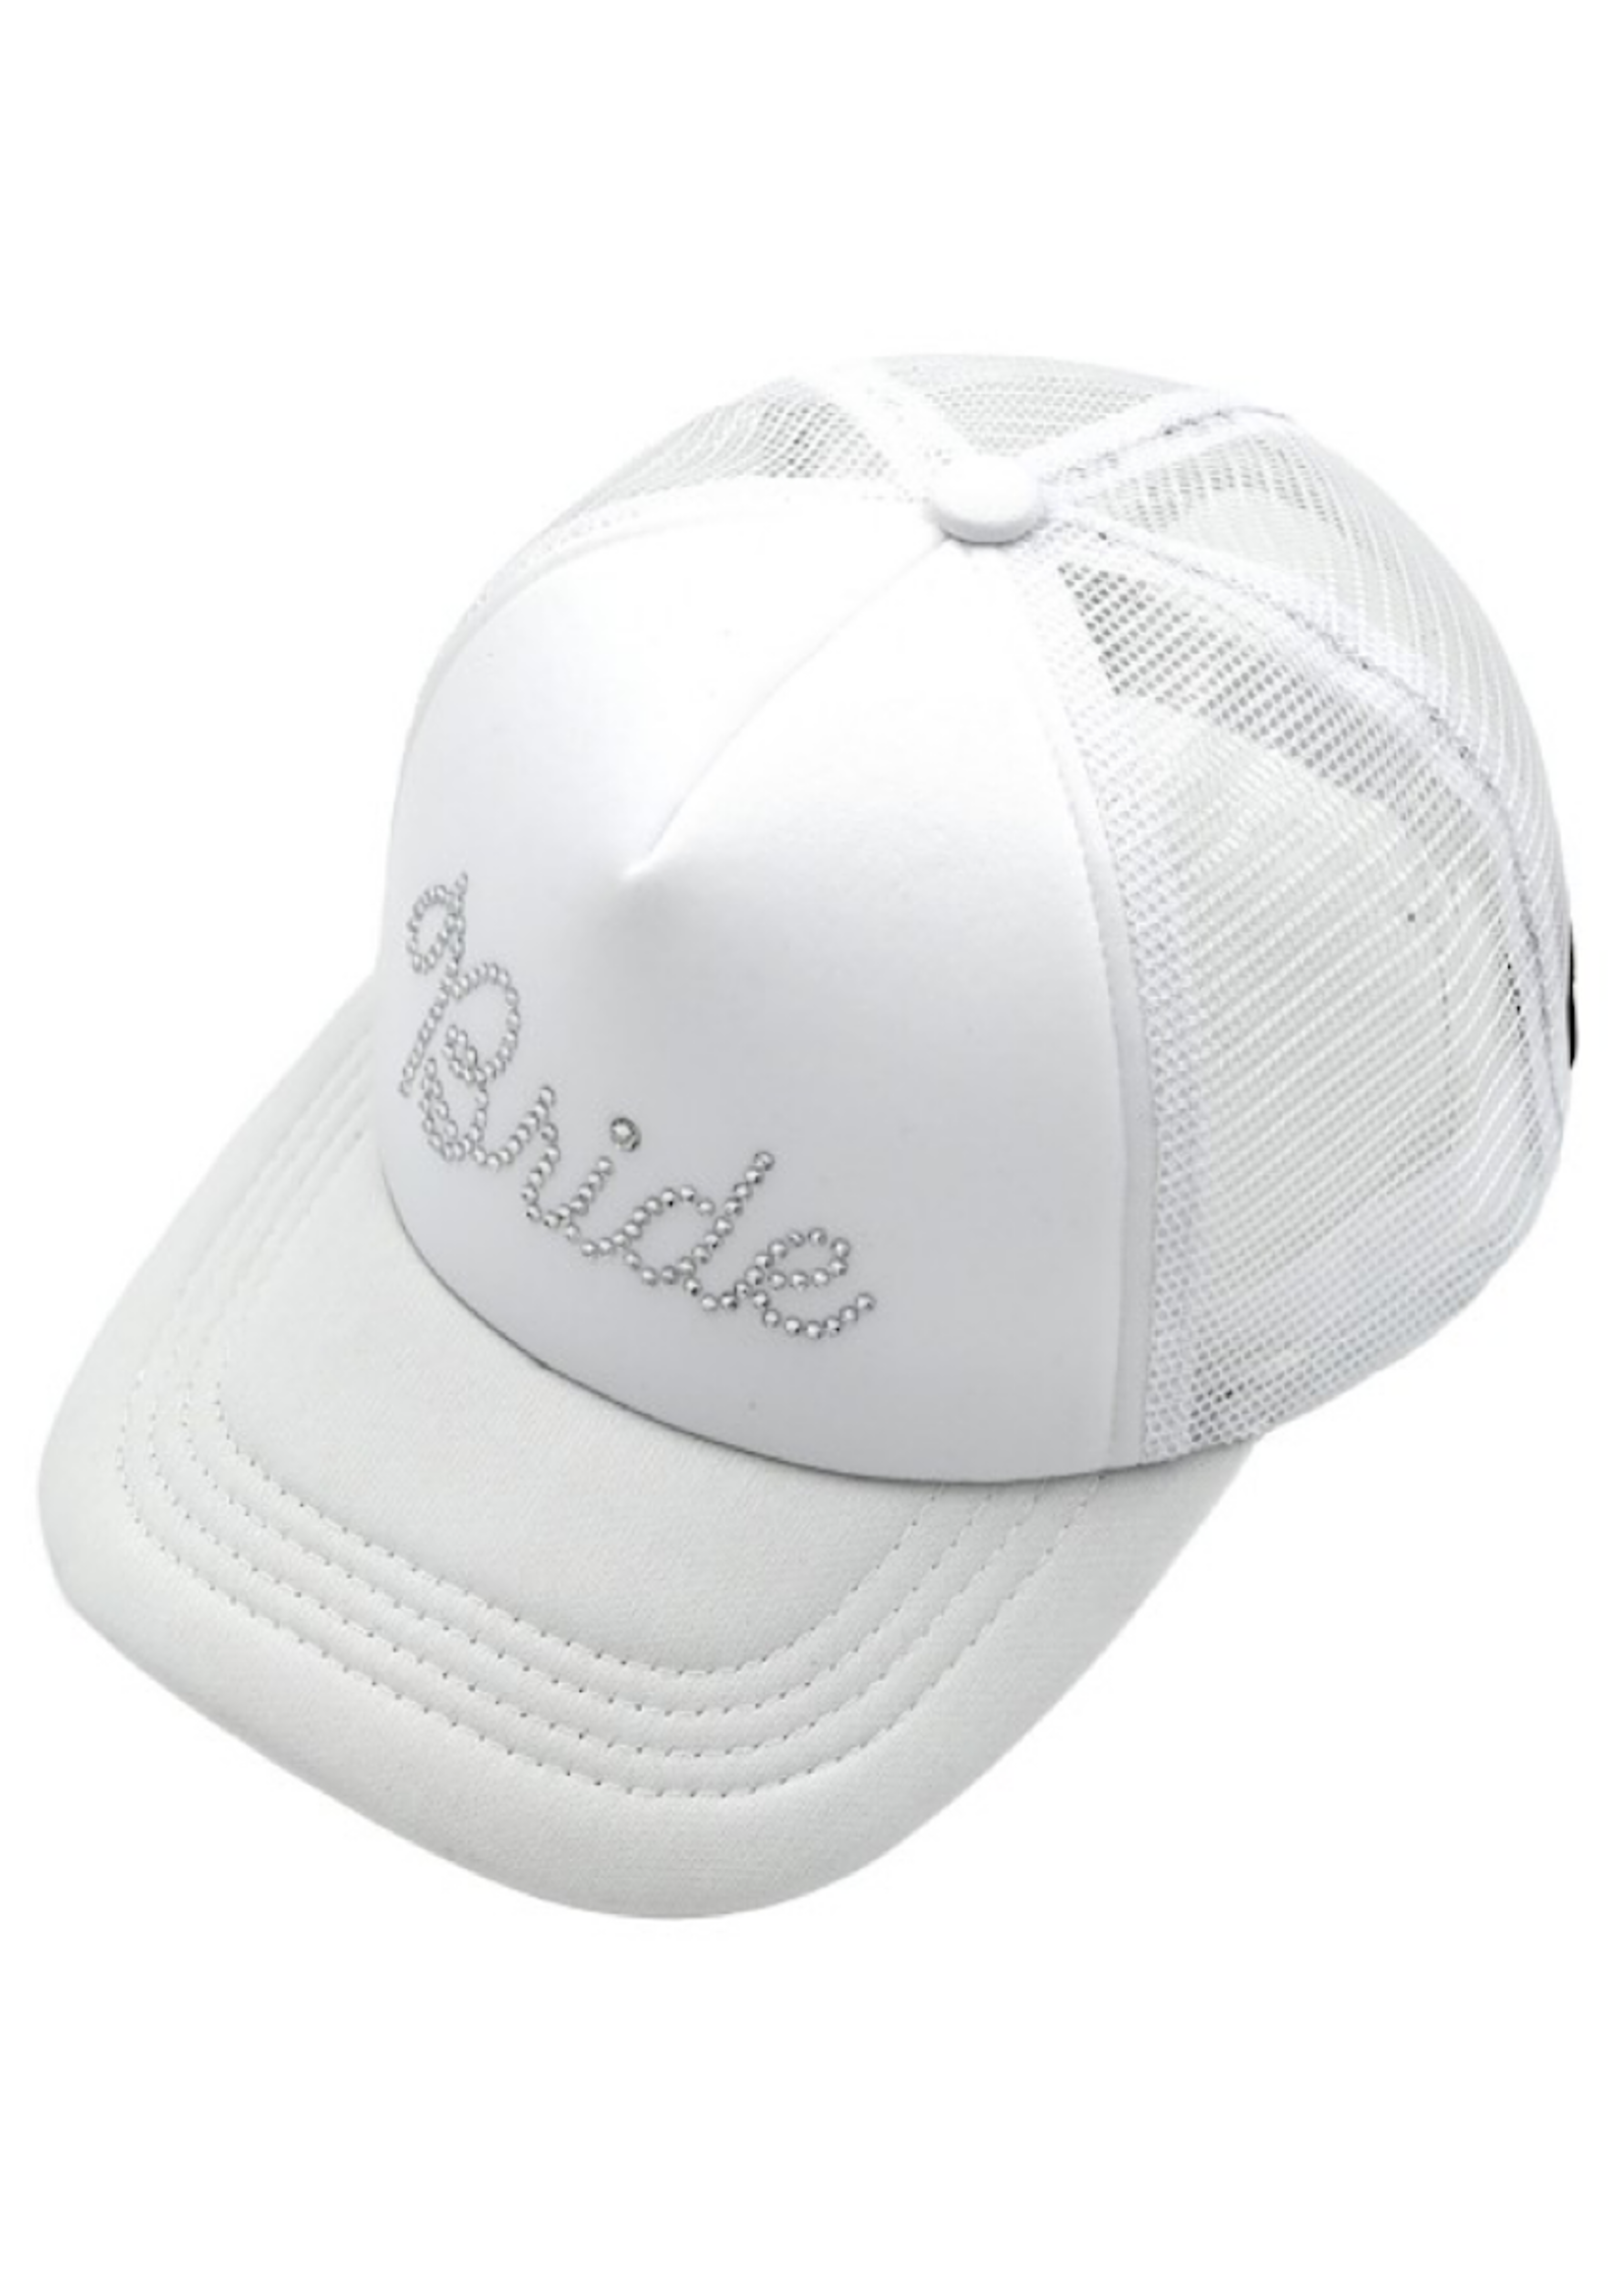 C.C Bride Rhinestone Trucker Hat